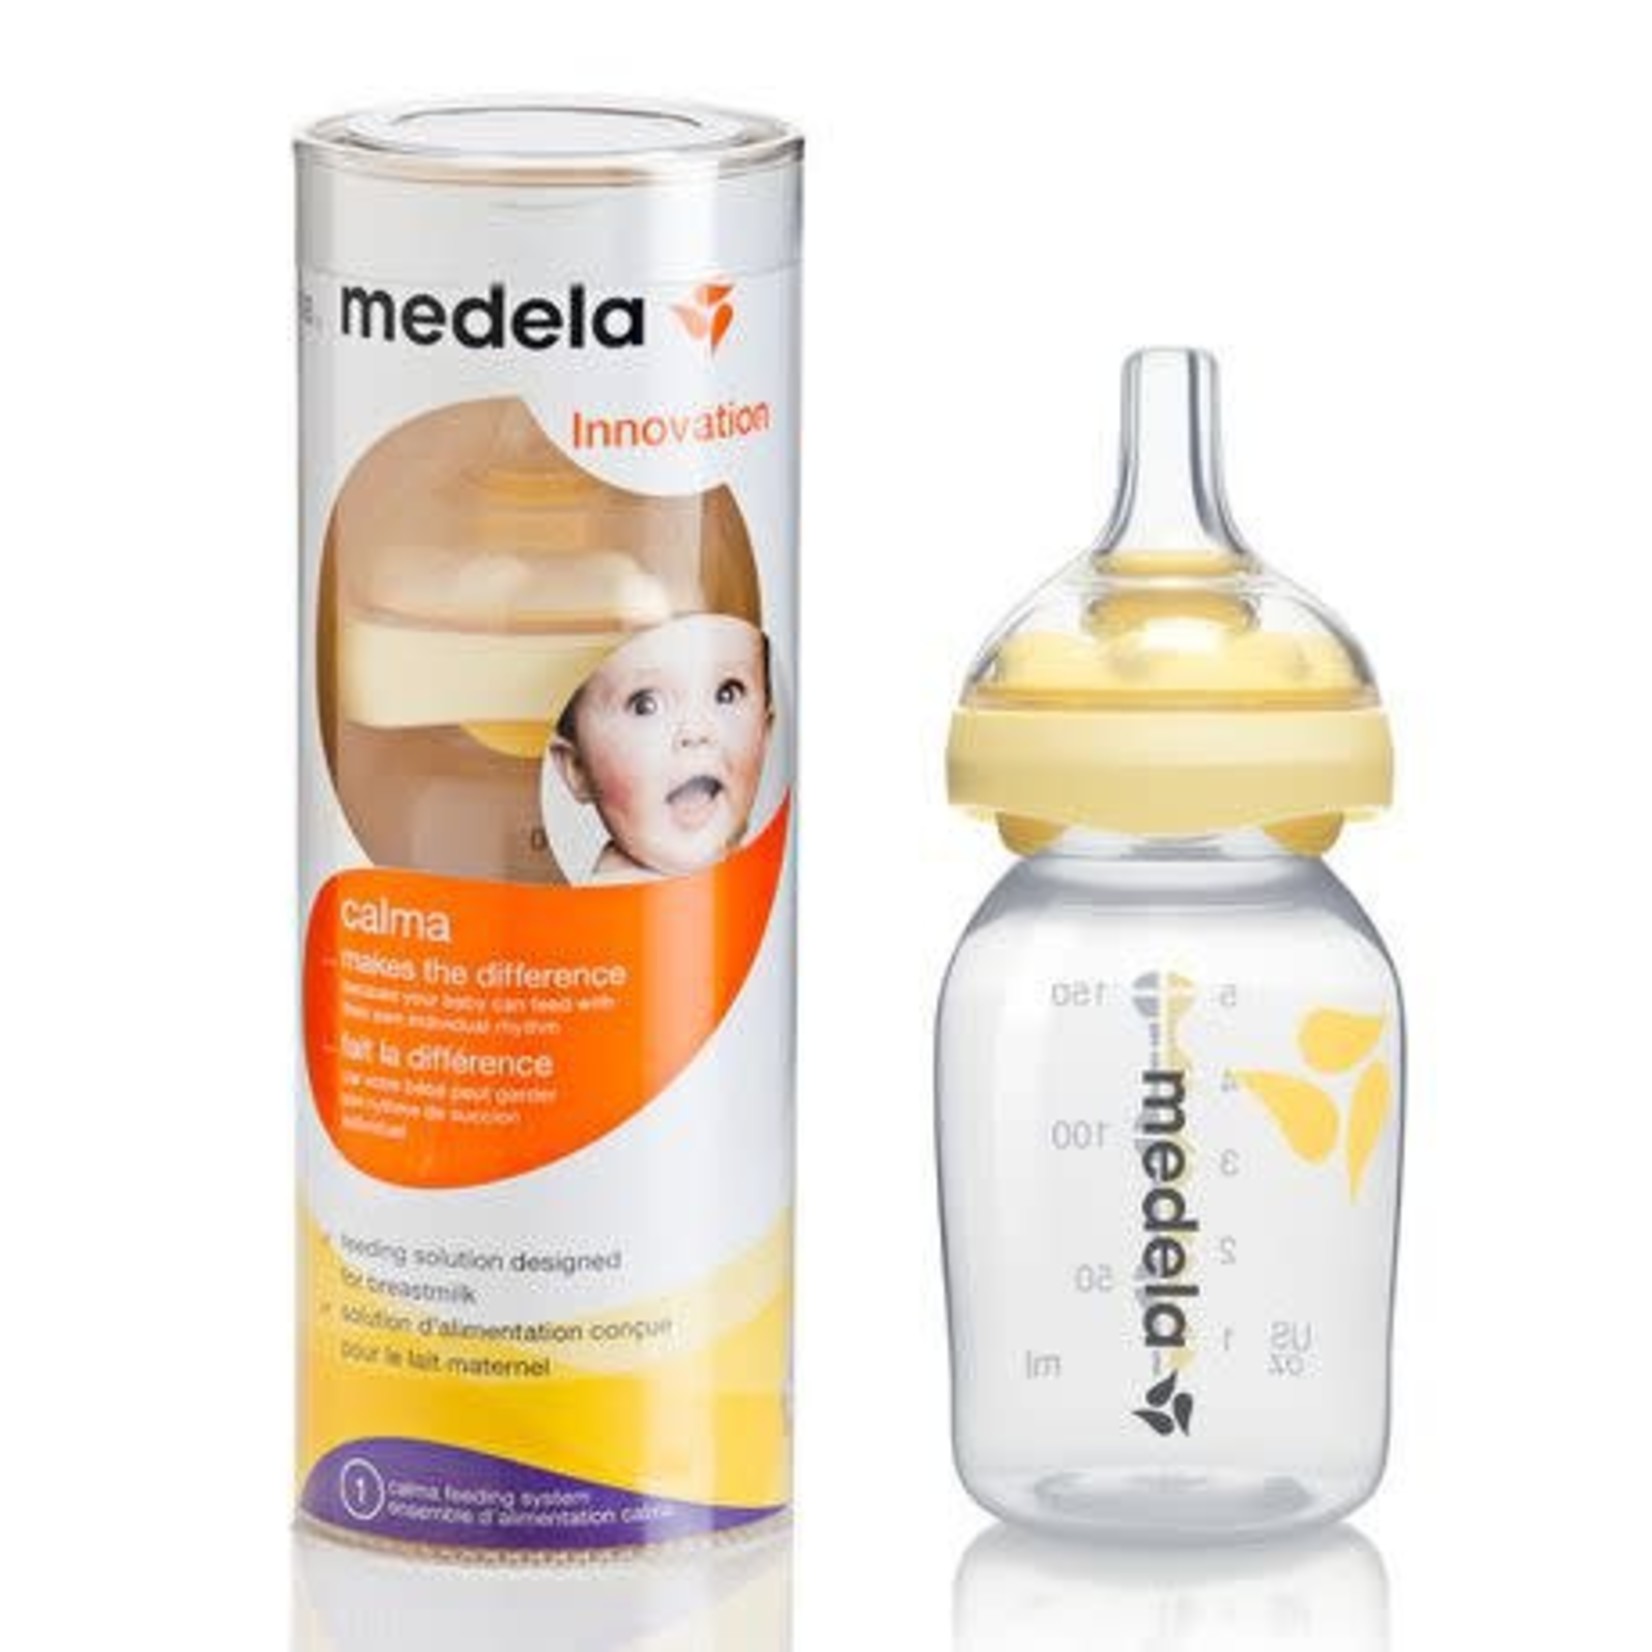 Medela Calma Bottle Nipple, Baby Bottle Teat for use with Medela  collection bottles, Made without BPA